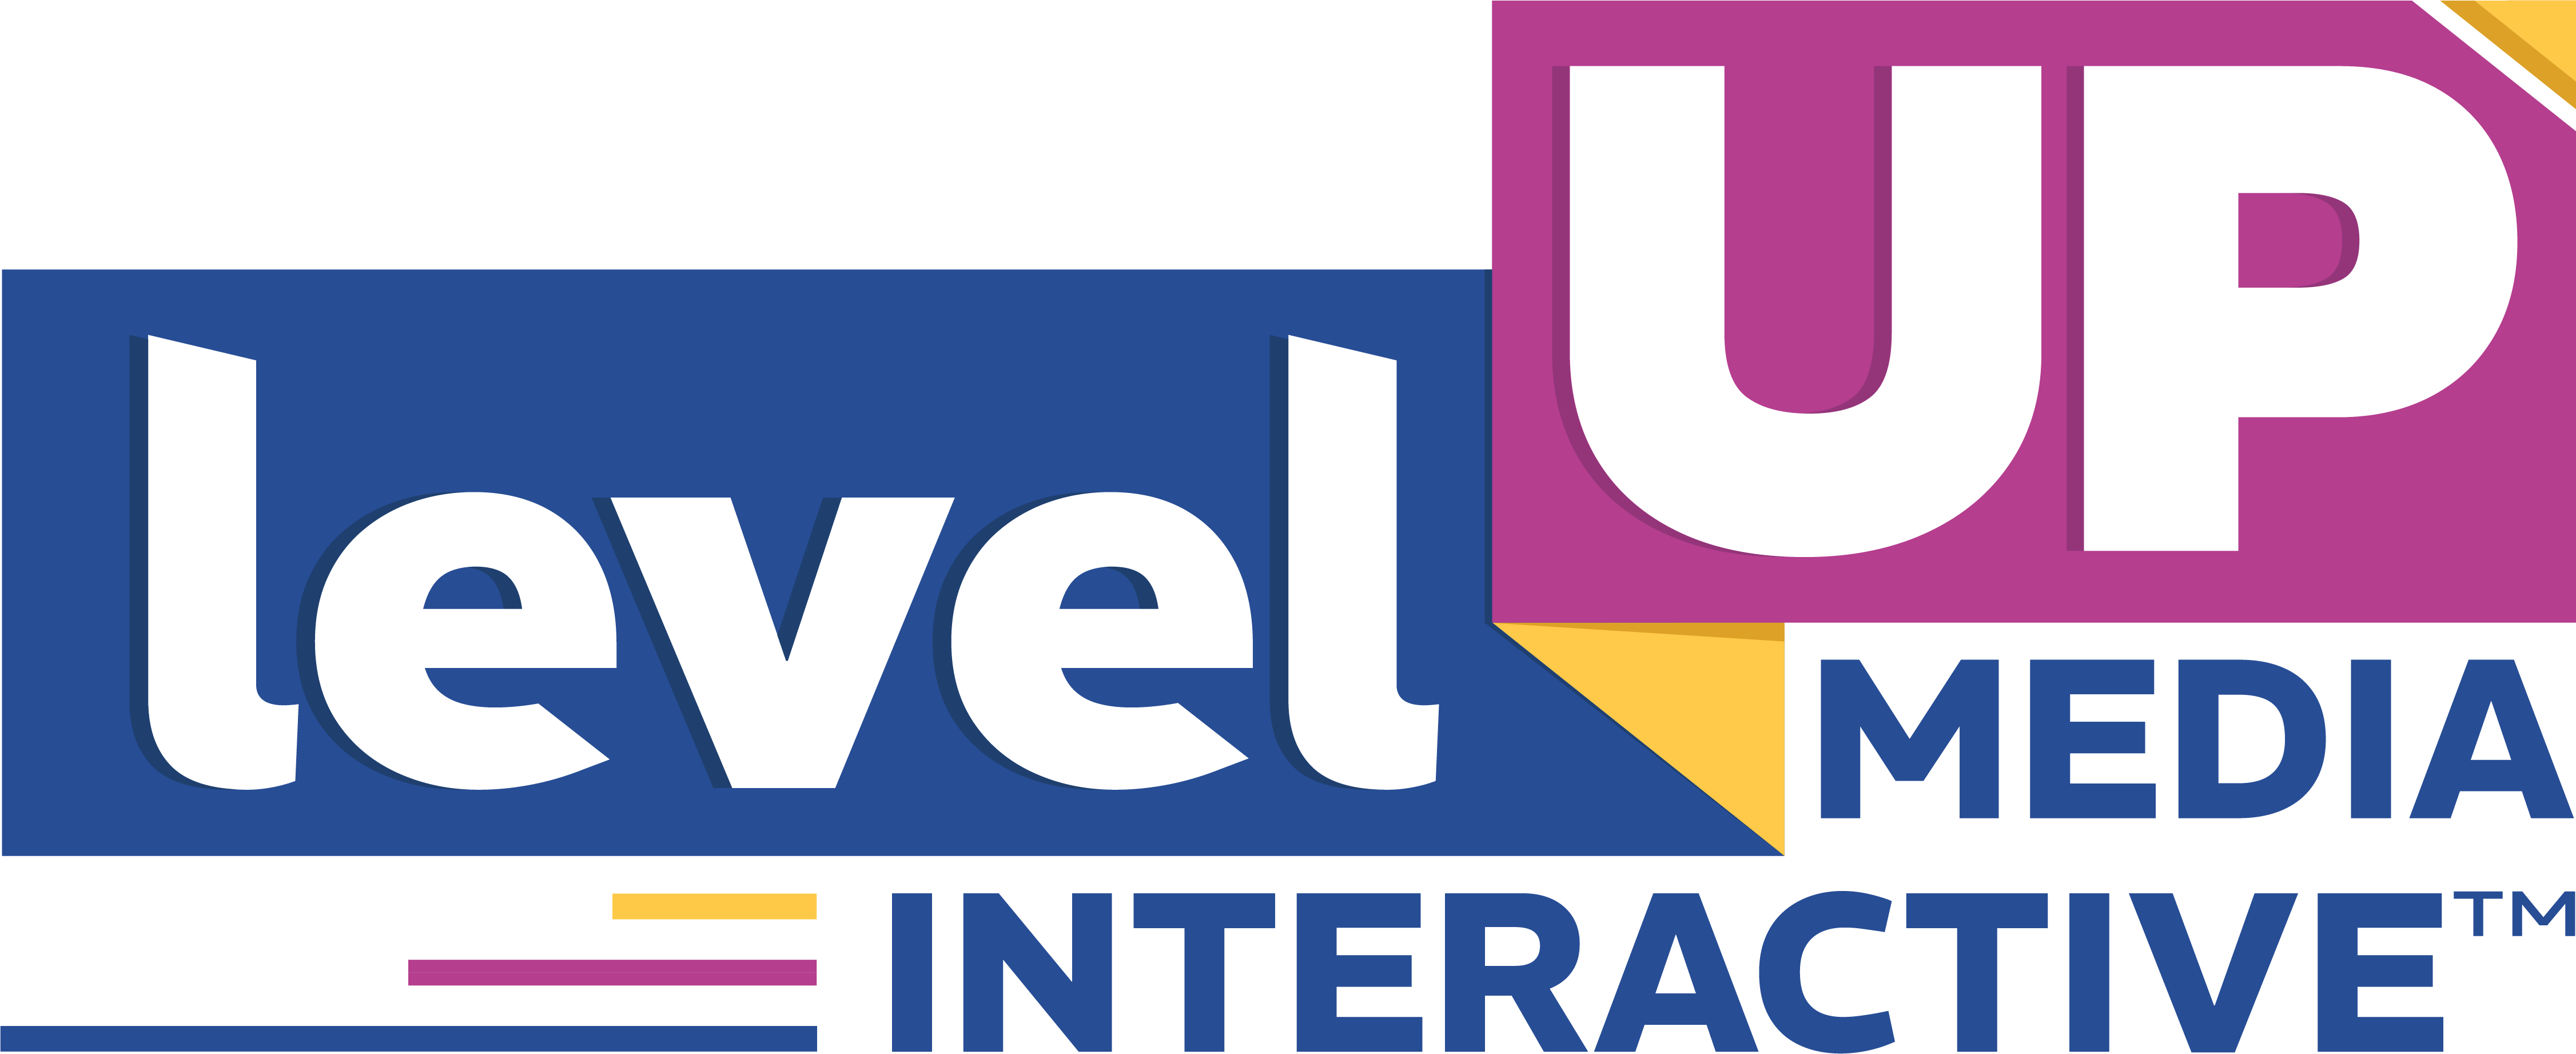 Level Up Media Interactive